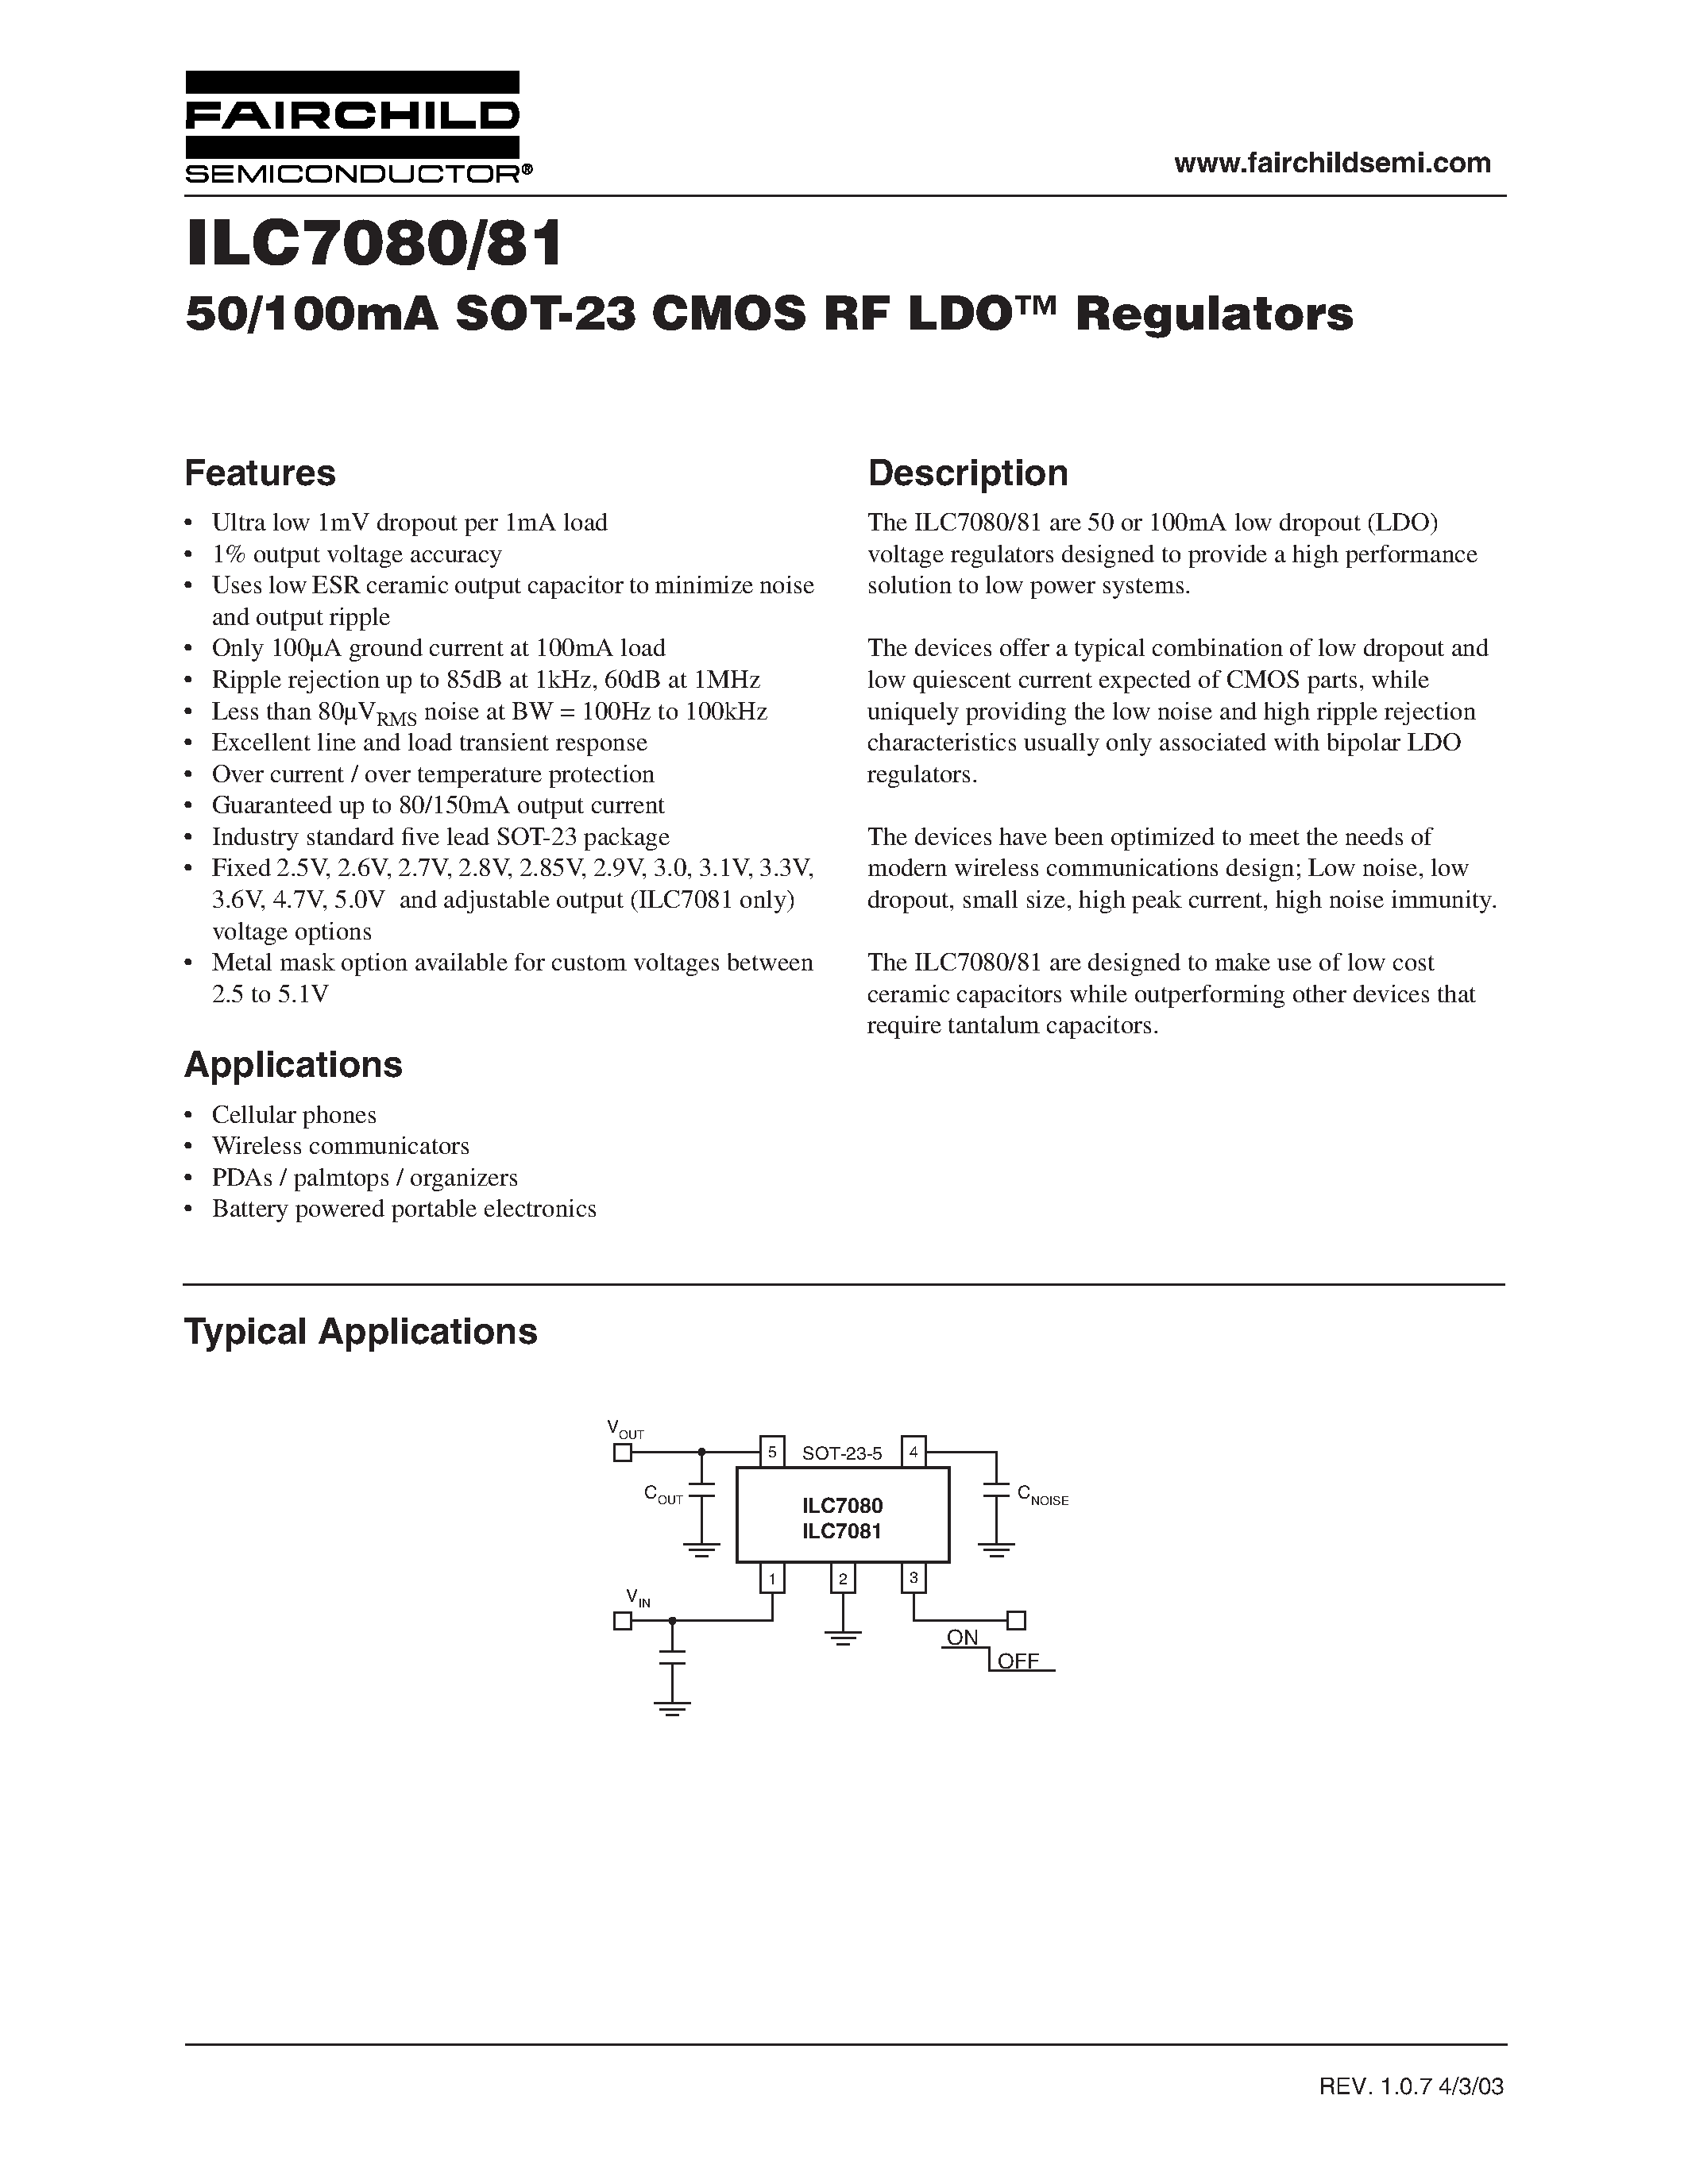 Datasheet ILC7081 - 50/100mA SOT-23 CMOS RF LDO Regulators page 1